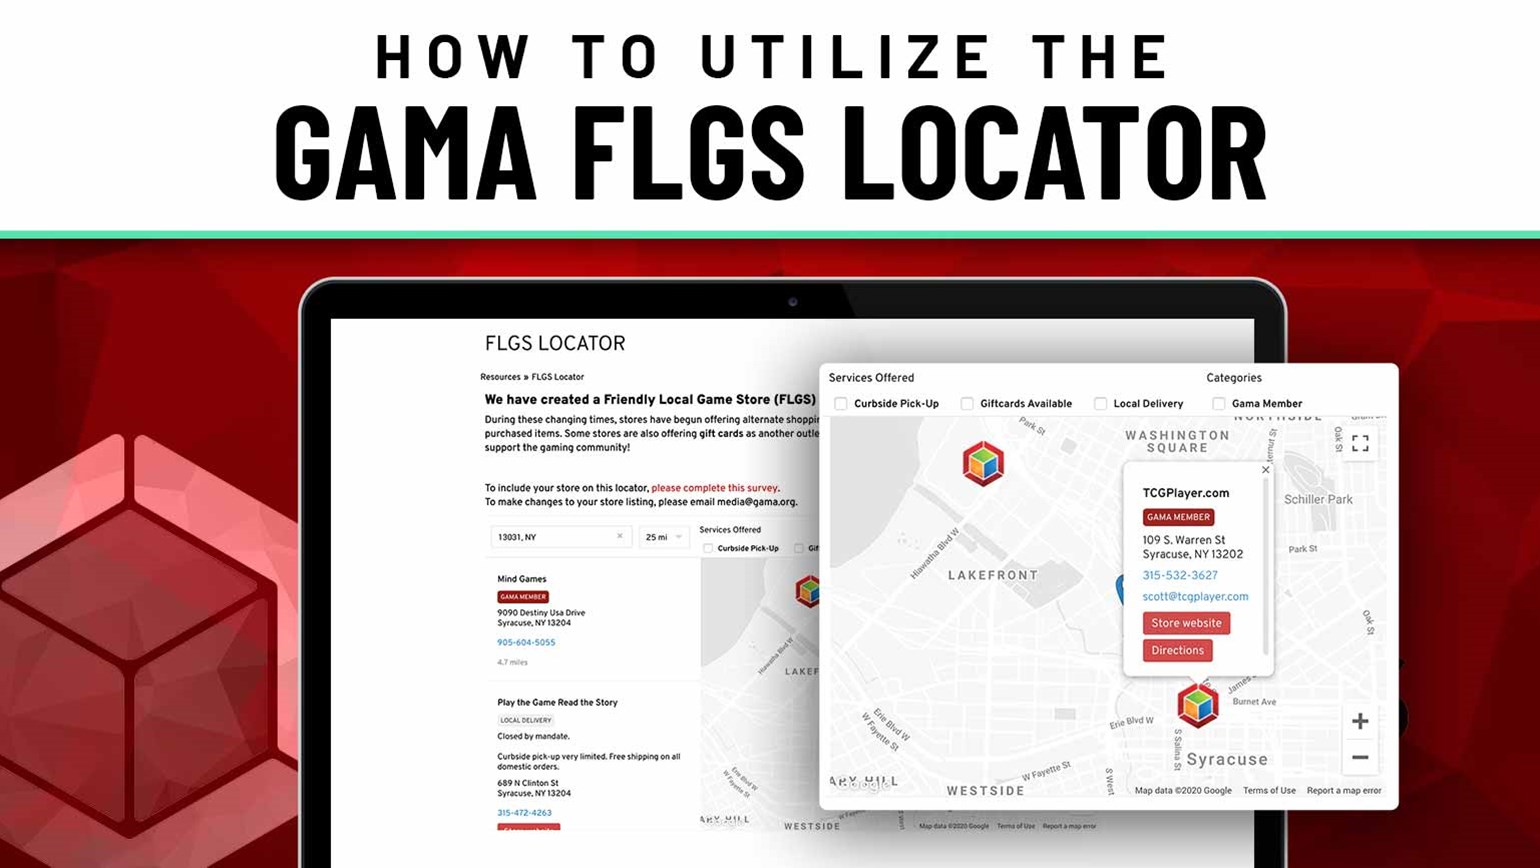 How to Utilize the GAMA FLGS Locator